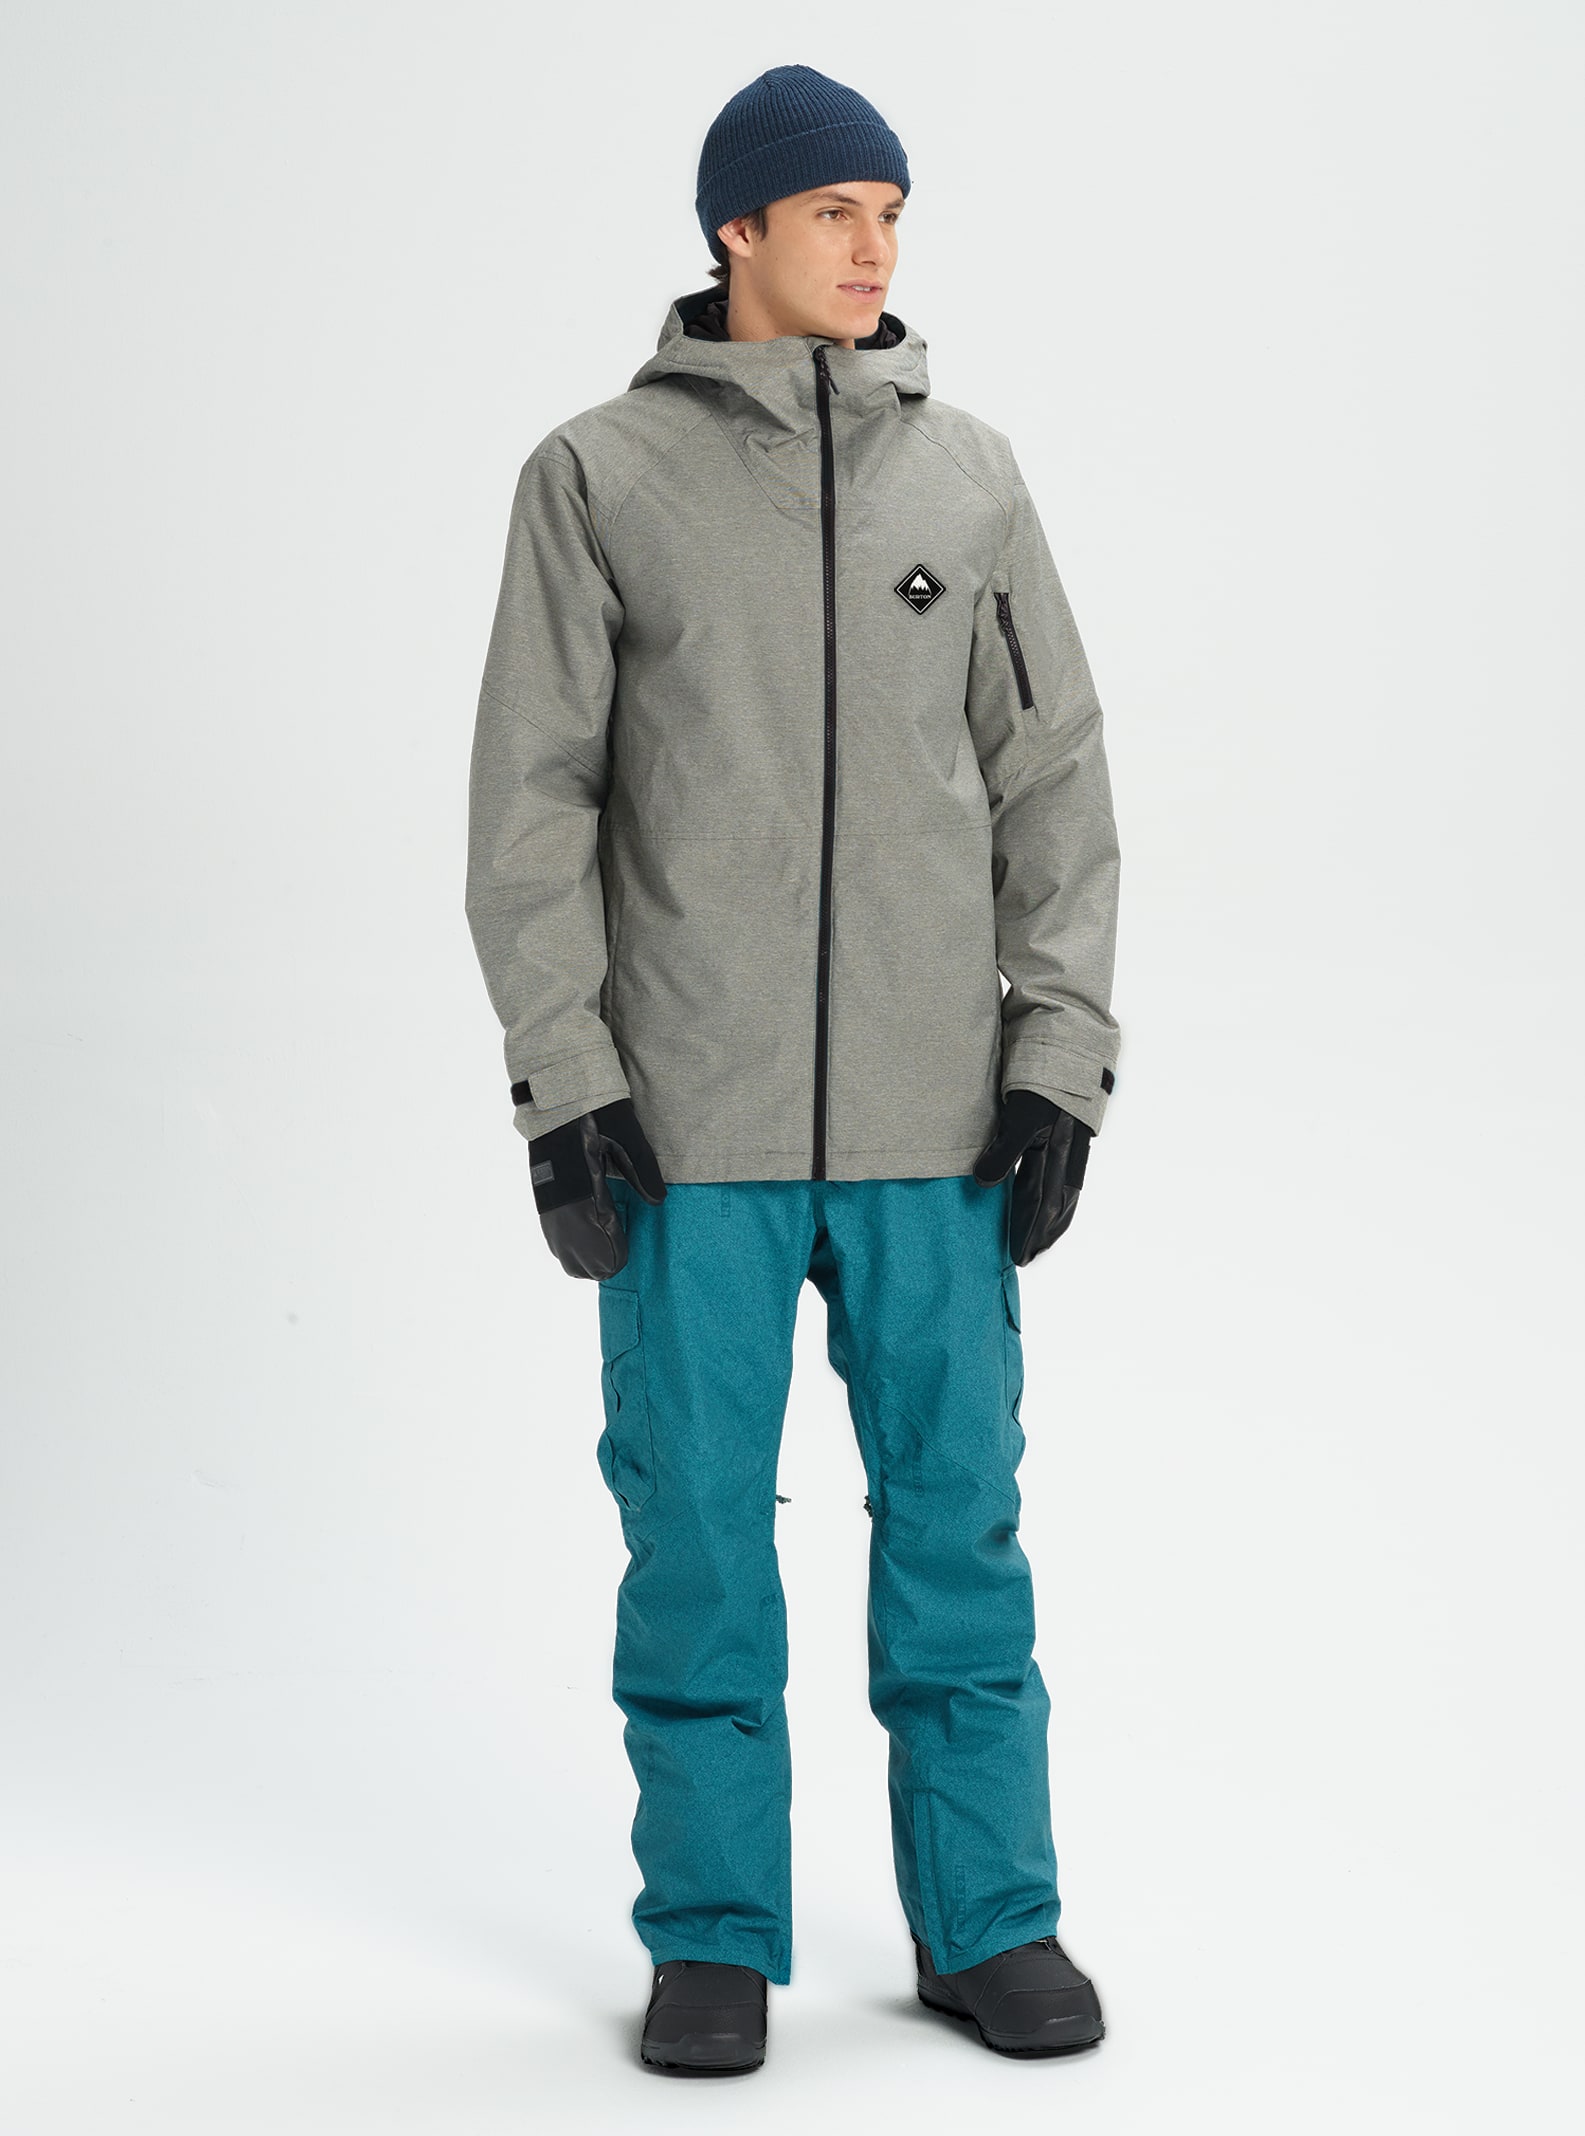 Details about   Burton Men's Ski/Snowboard Hilltop Jacket FMSCAR/SPUNOT Size XXS NEW With Tags 